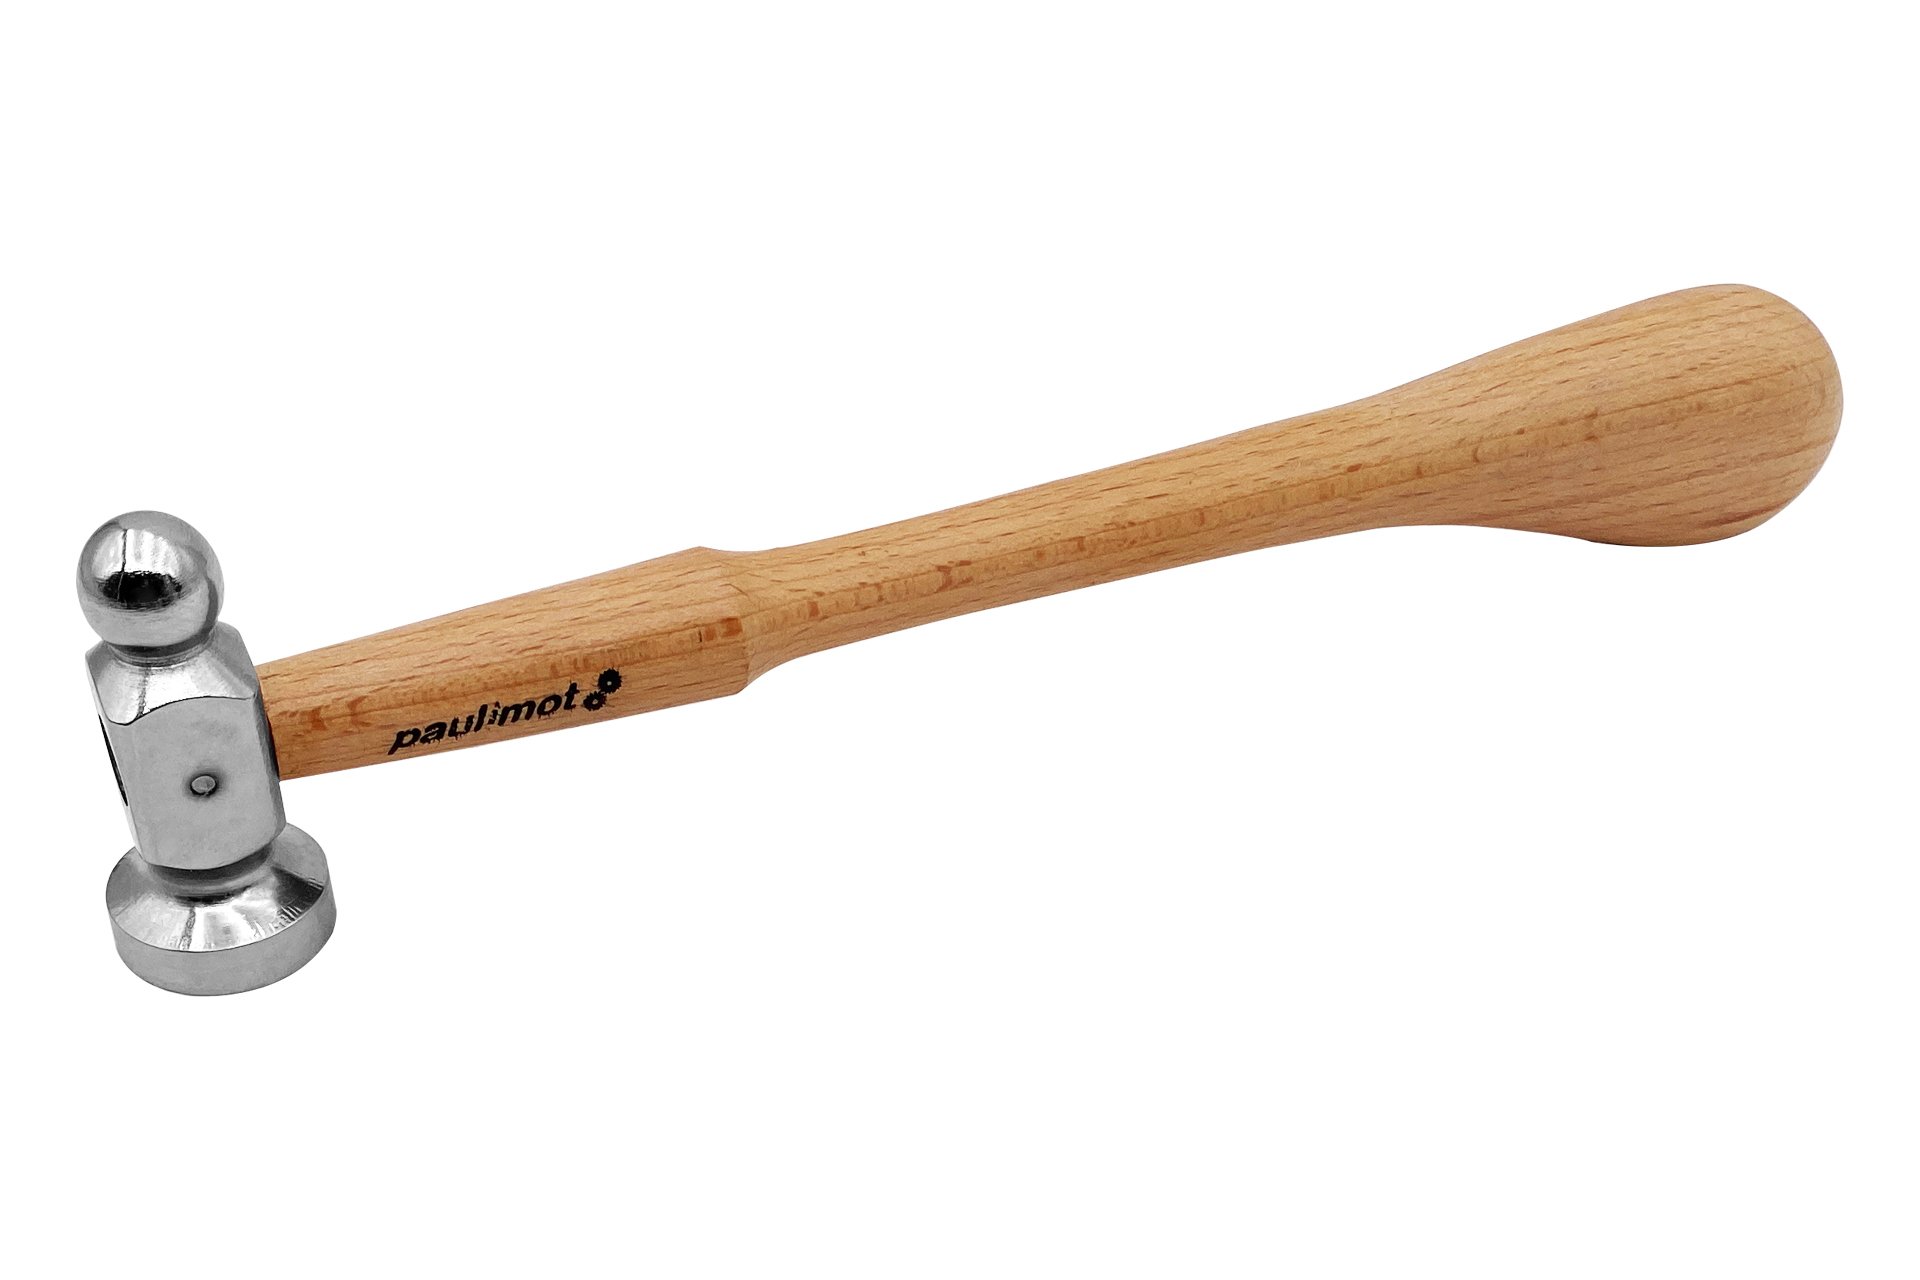 Ziselierhammer, 200 g